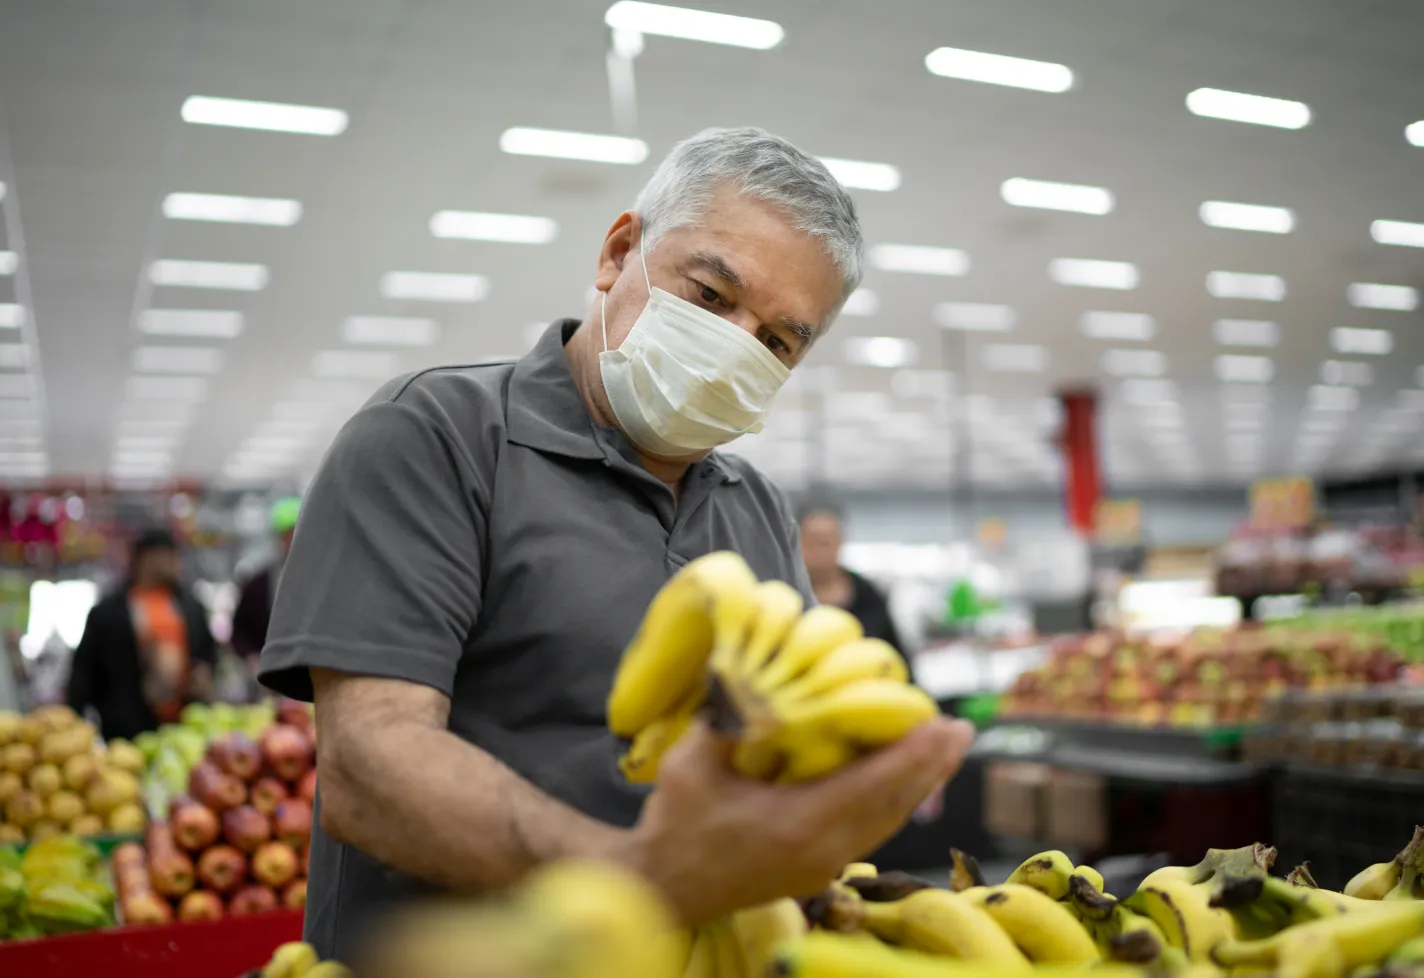 Senior man with disposable medical mask shopping in supermarket holding bananas.